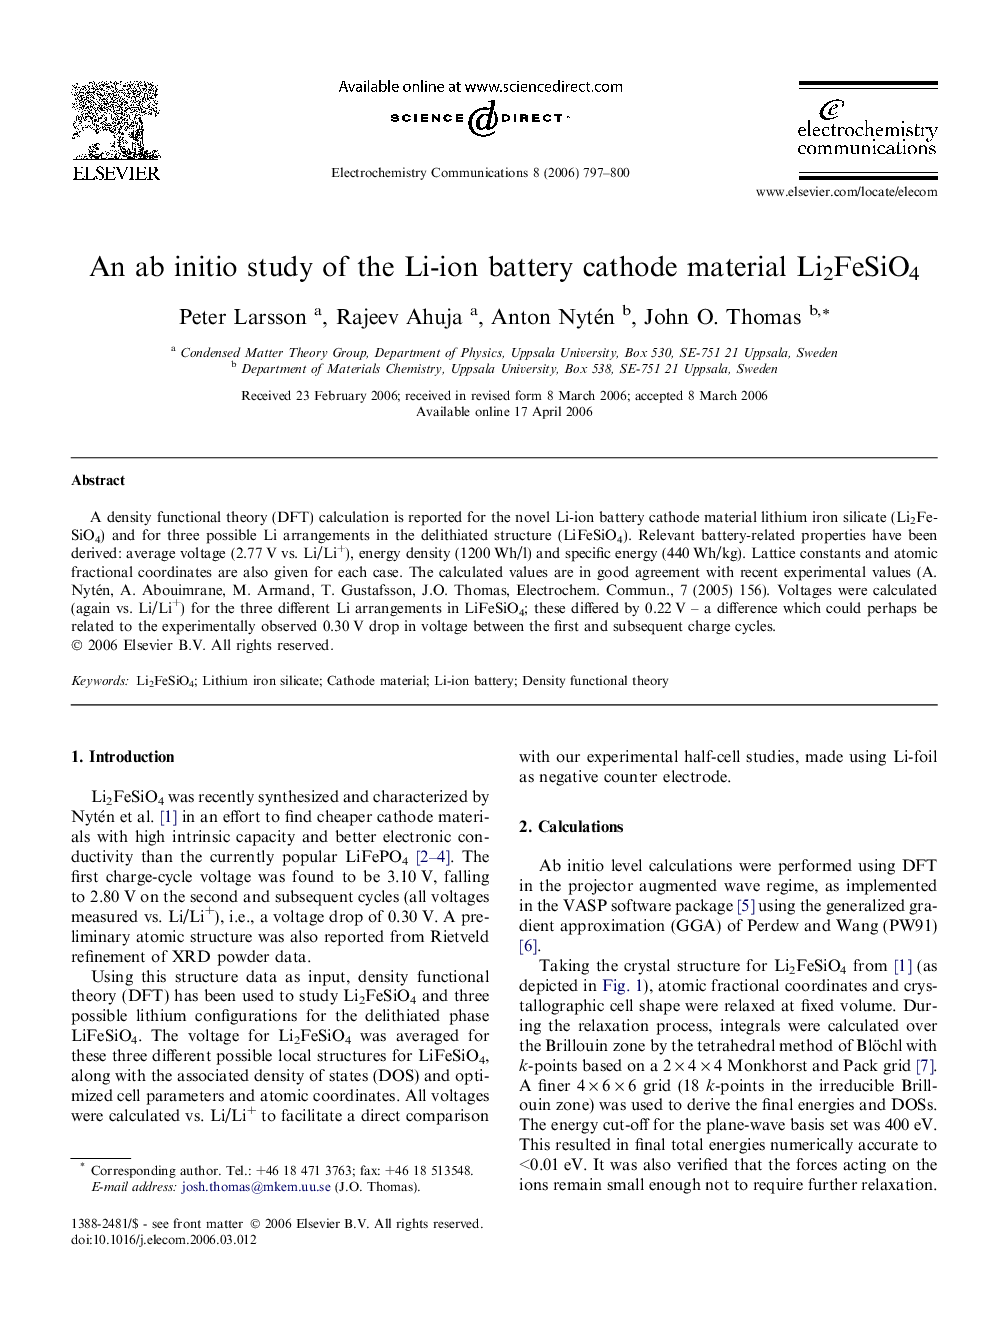 An ab initio study of the Li-ion battery cathode material Li2FeSiO4